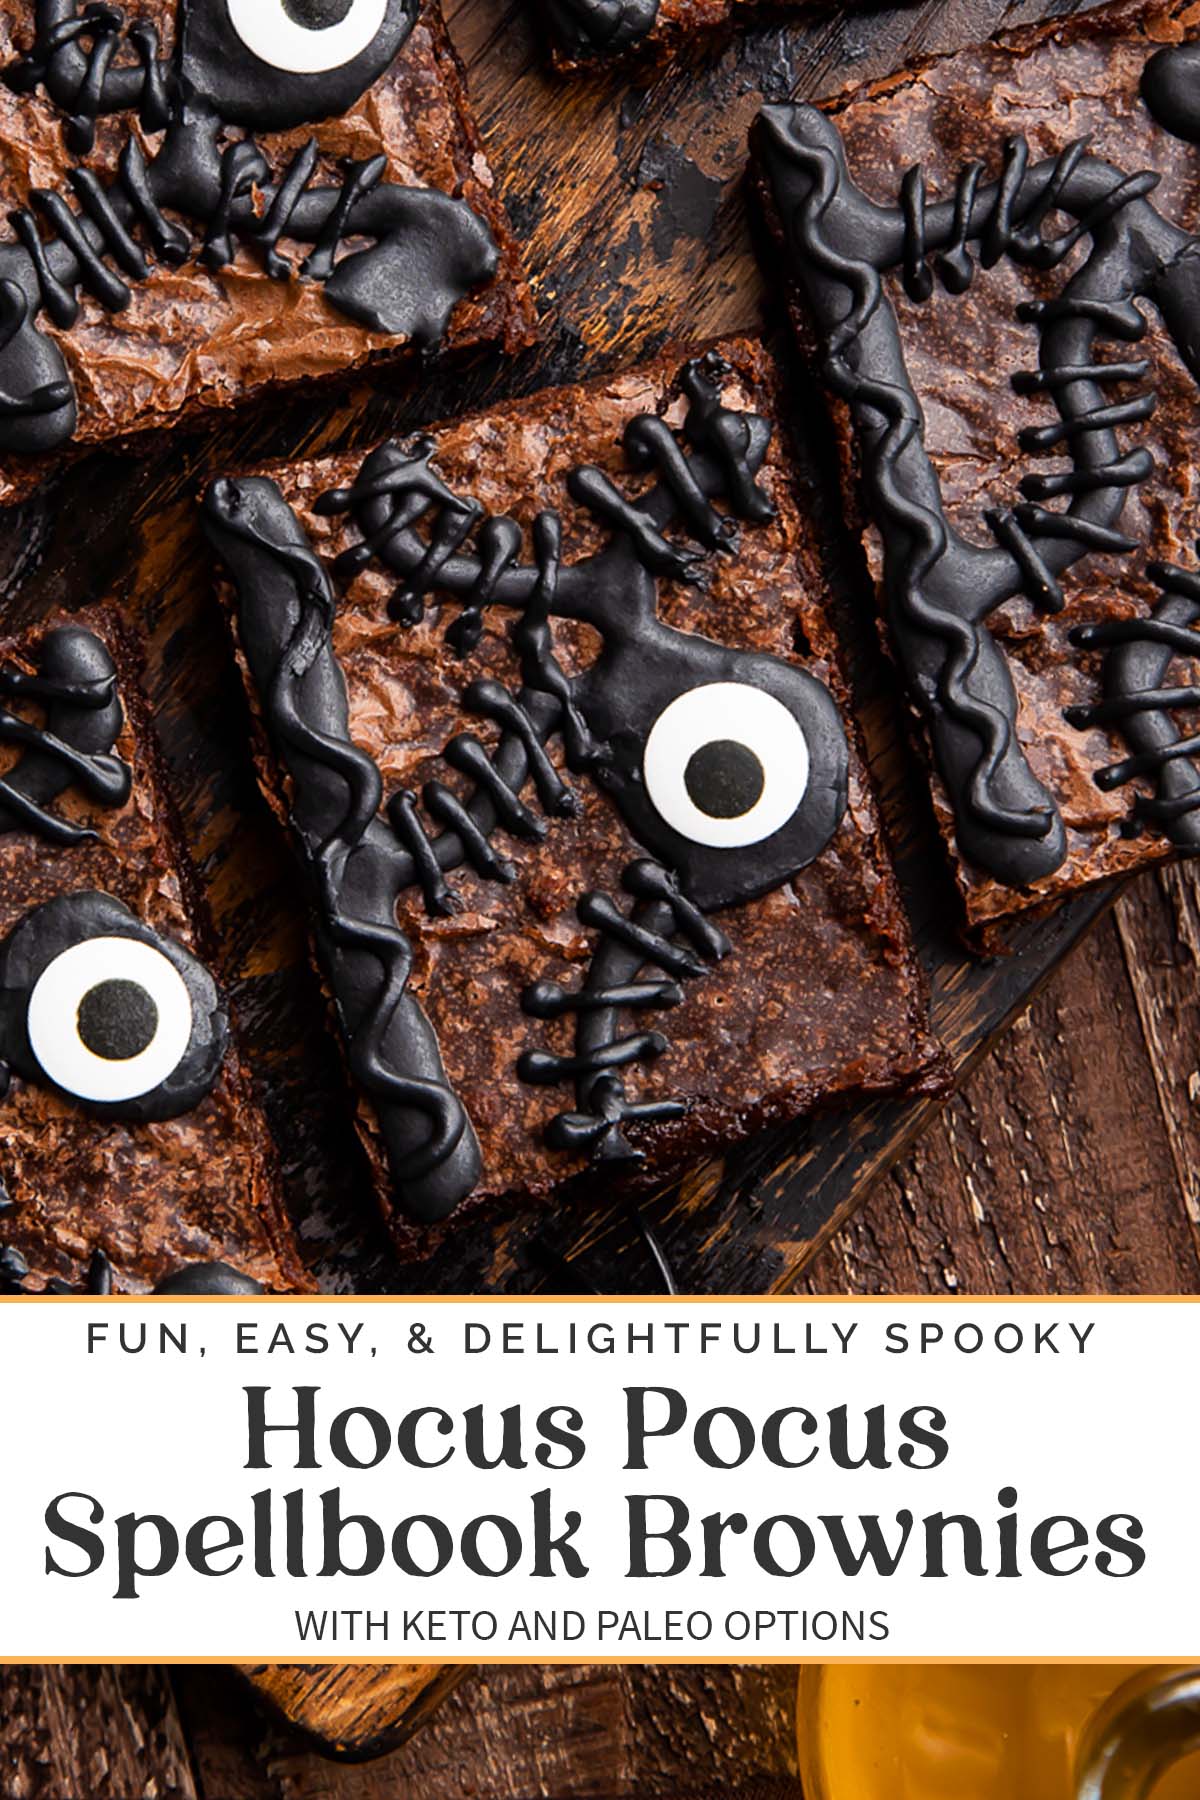 Pin graphic for Hocus Pocus spellbook brownies.